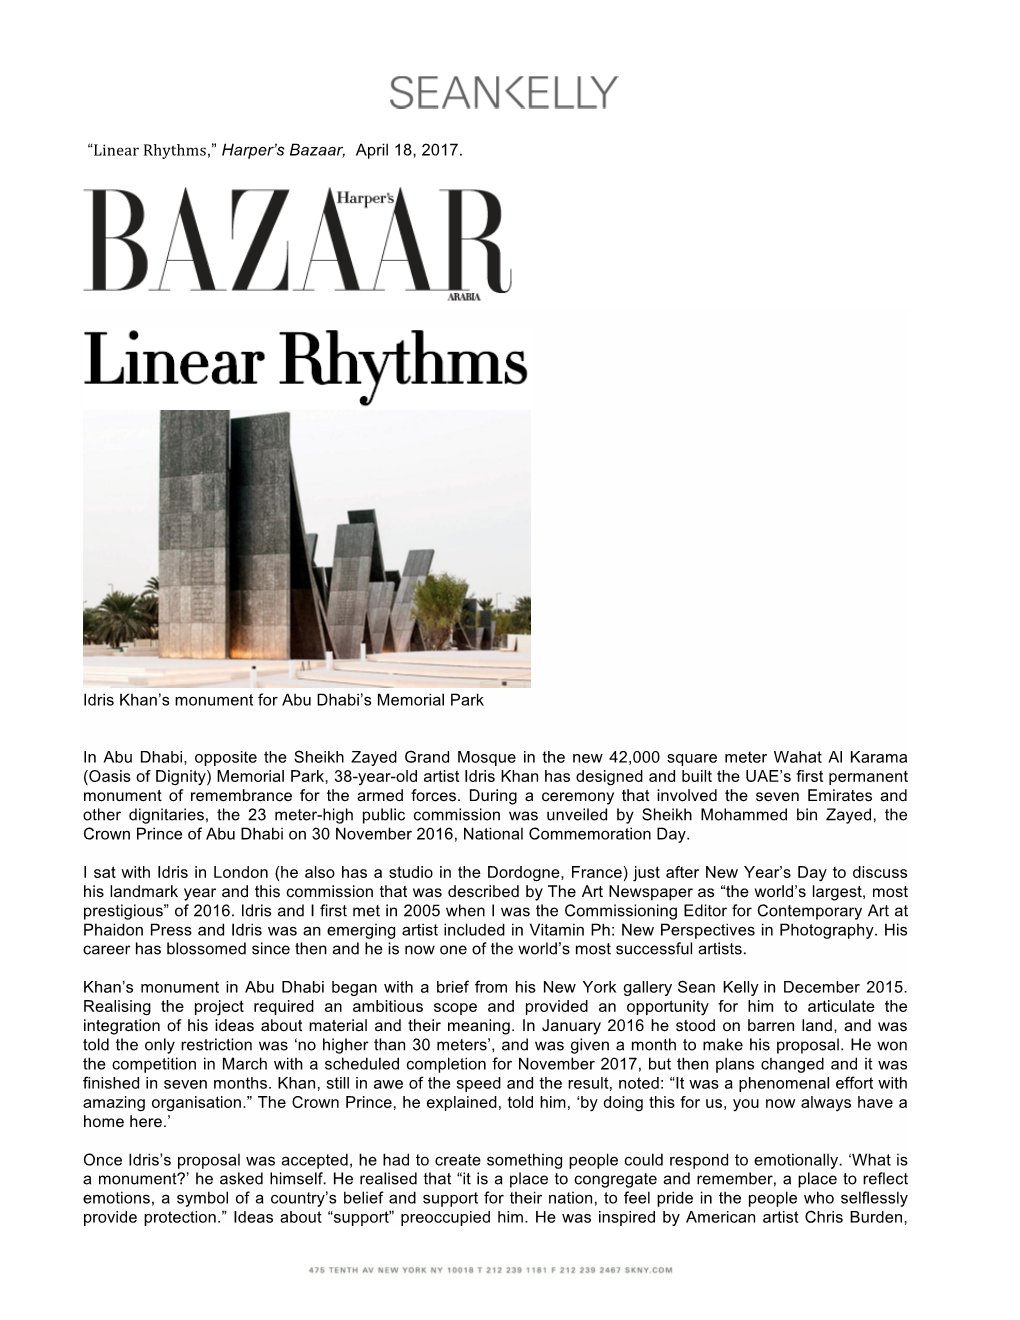 Harper's Bazaar, April 18, 2017. Idris Khan's Monument for Abu Dhabi's